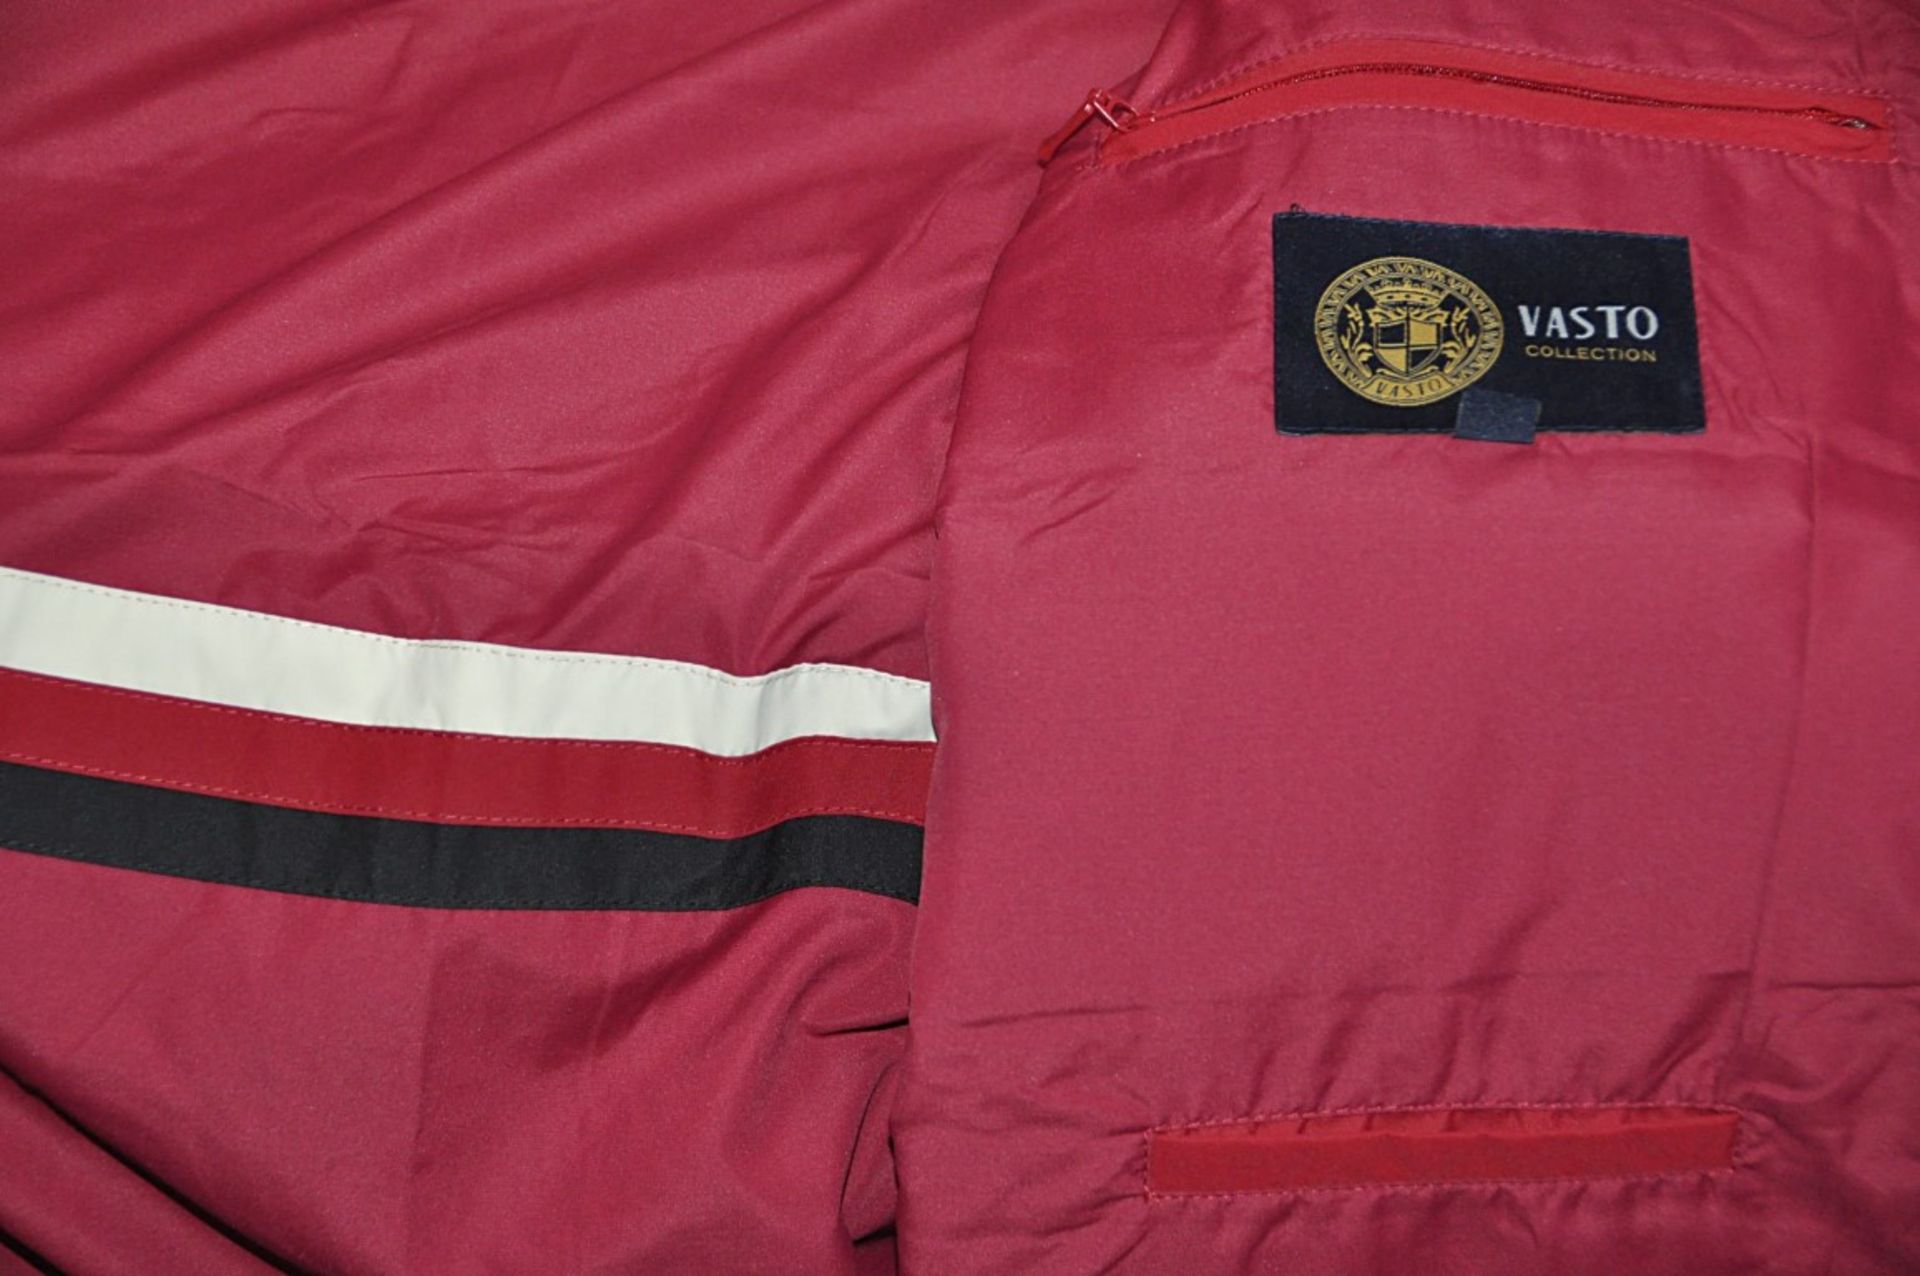 1 x Men's Hooded Seafaring Jacket By International Luxury Brand "Vasto" (SAZ7231/431) – Size: Medium - Image 6 of 7